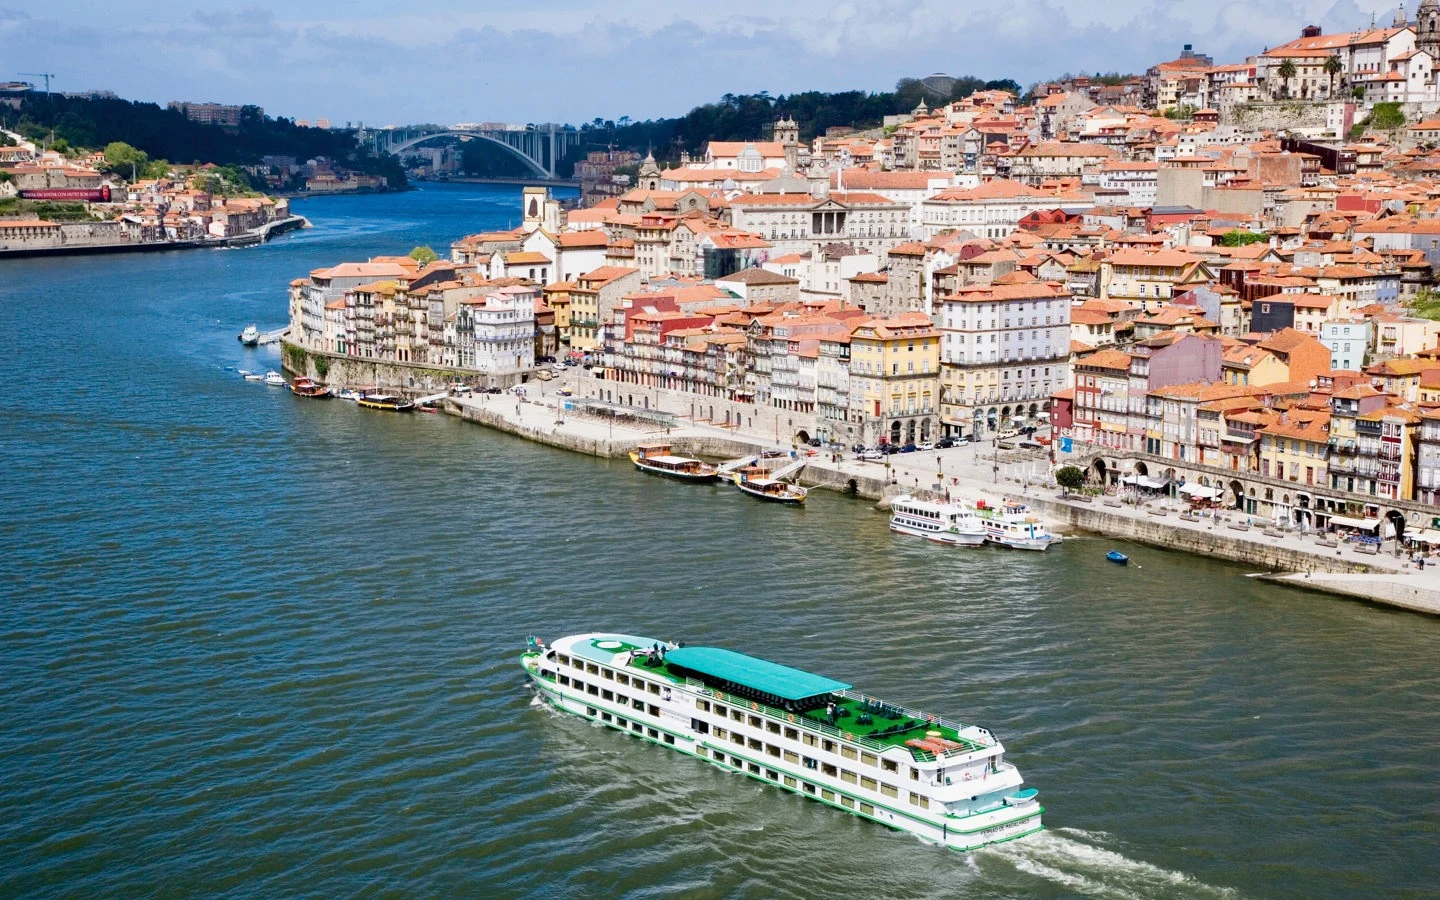 A river cruise on the Duoro, Porto